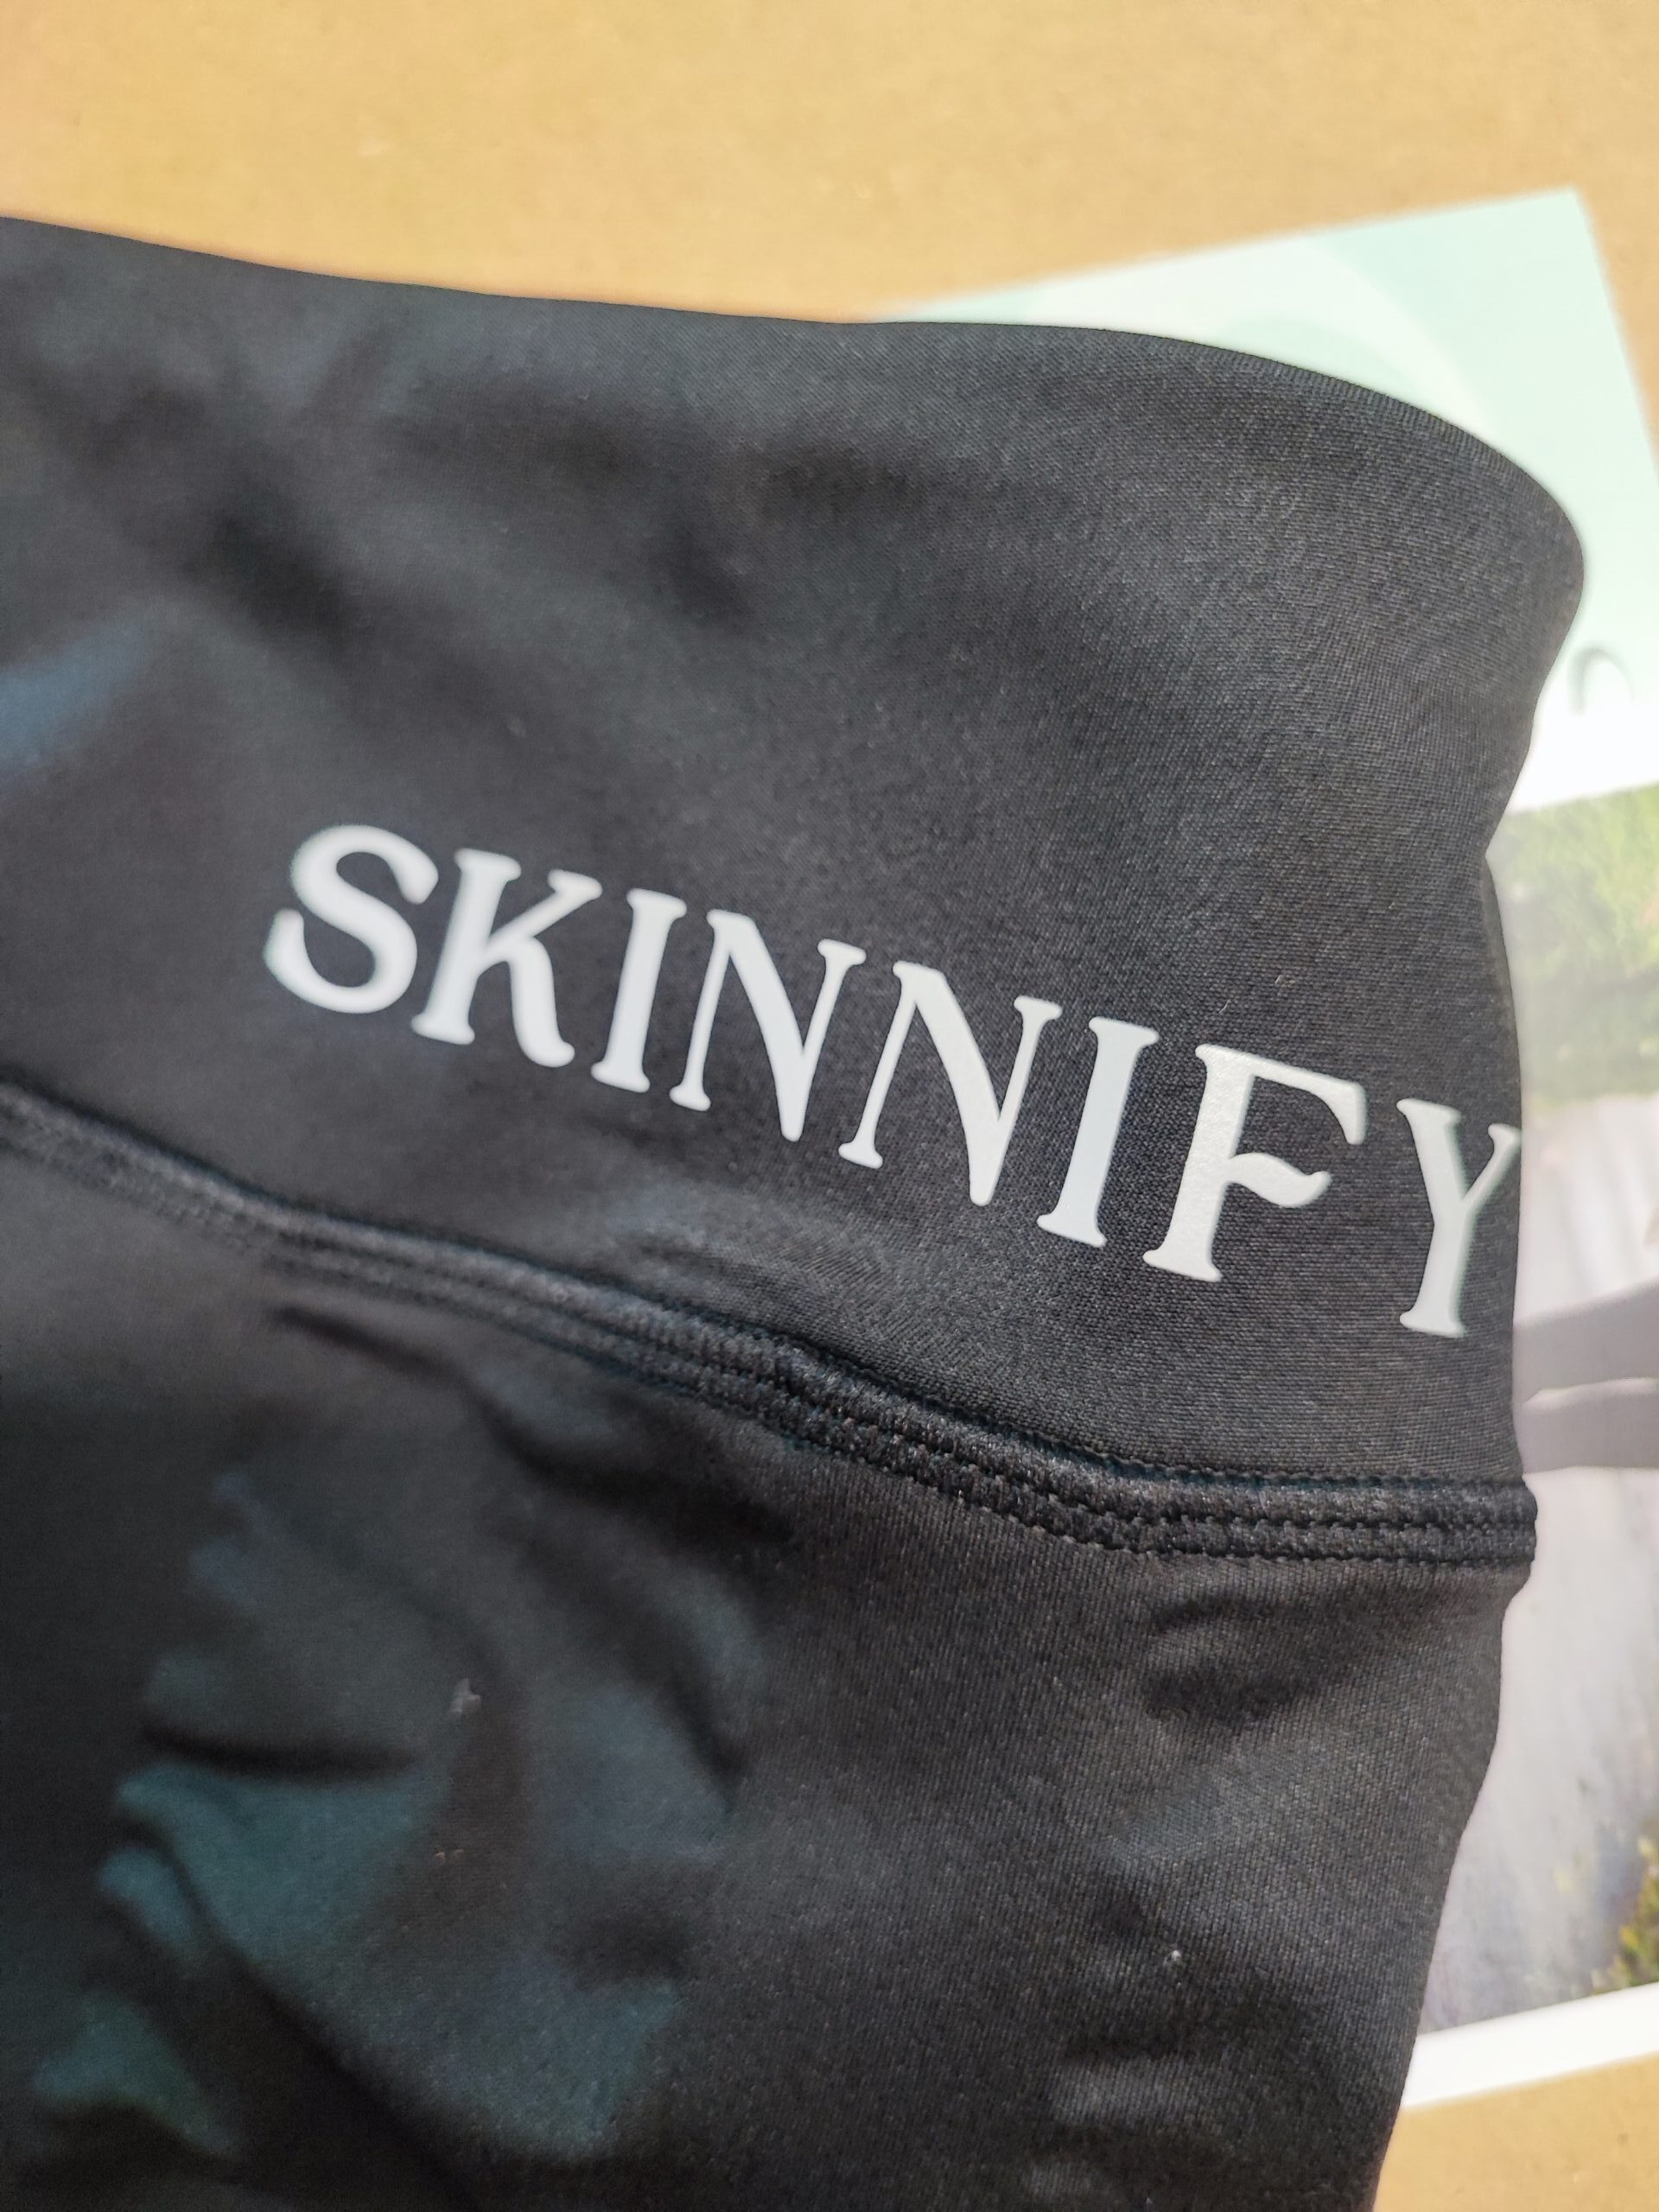 Skinnify Leggings im Test: Meine Erfahrung